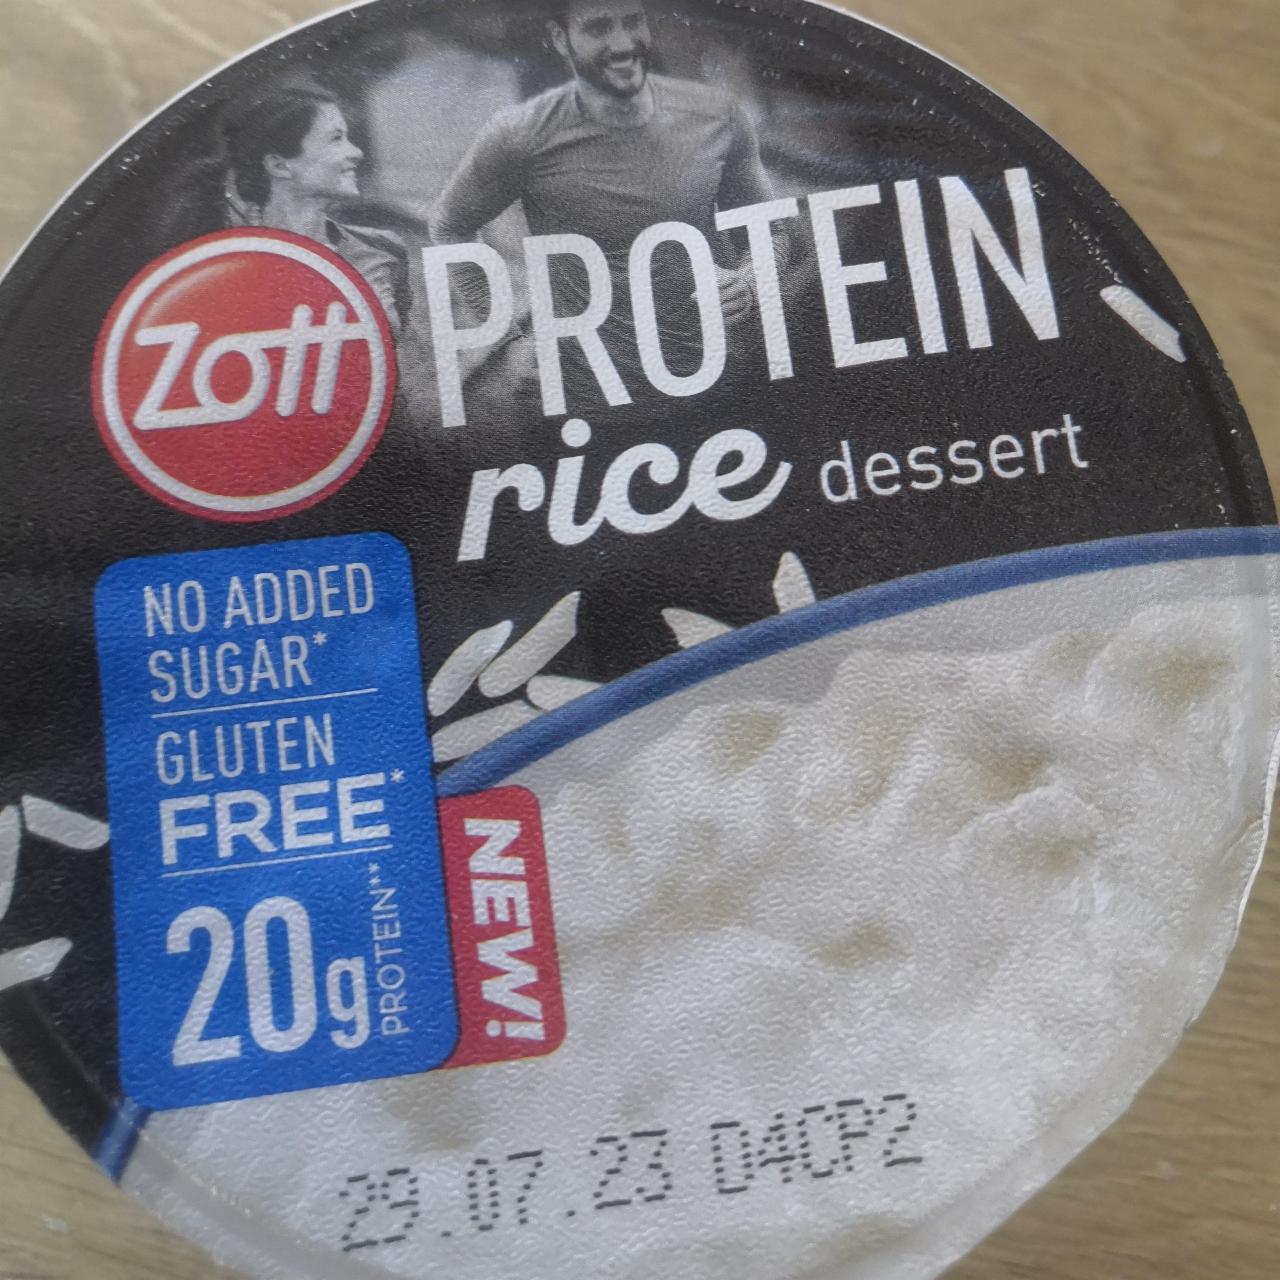 Zdjęcia - Protein Rice dessert Zott